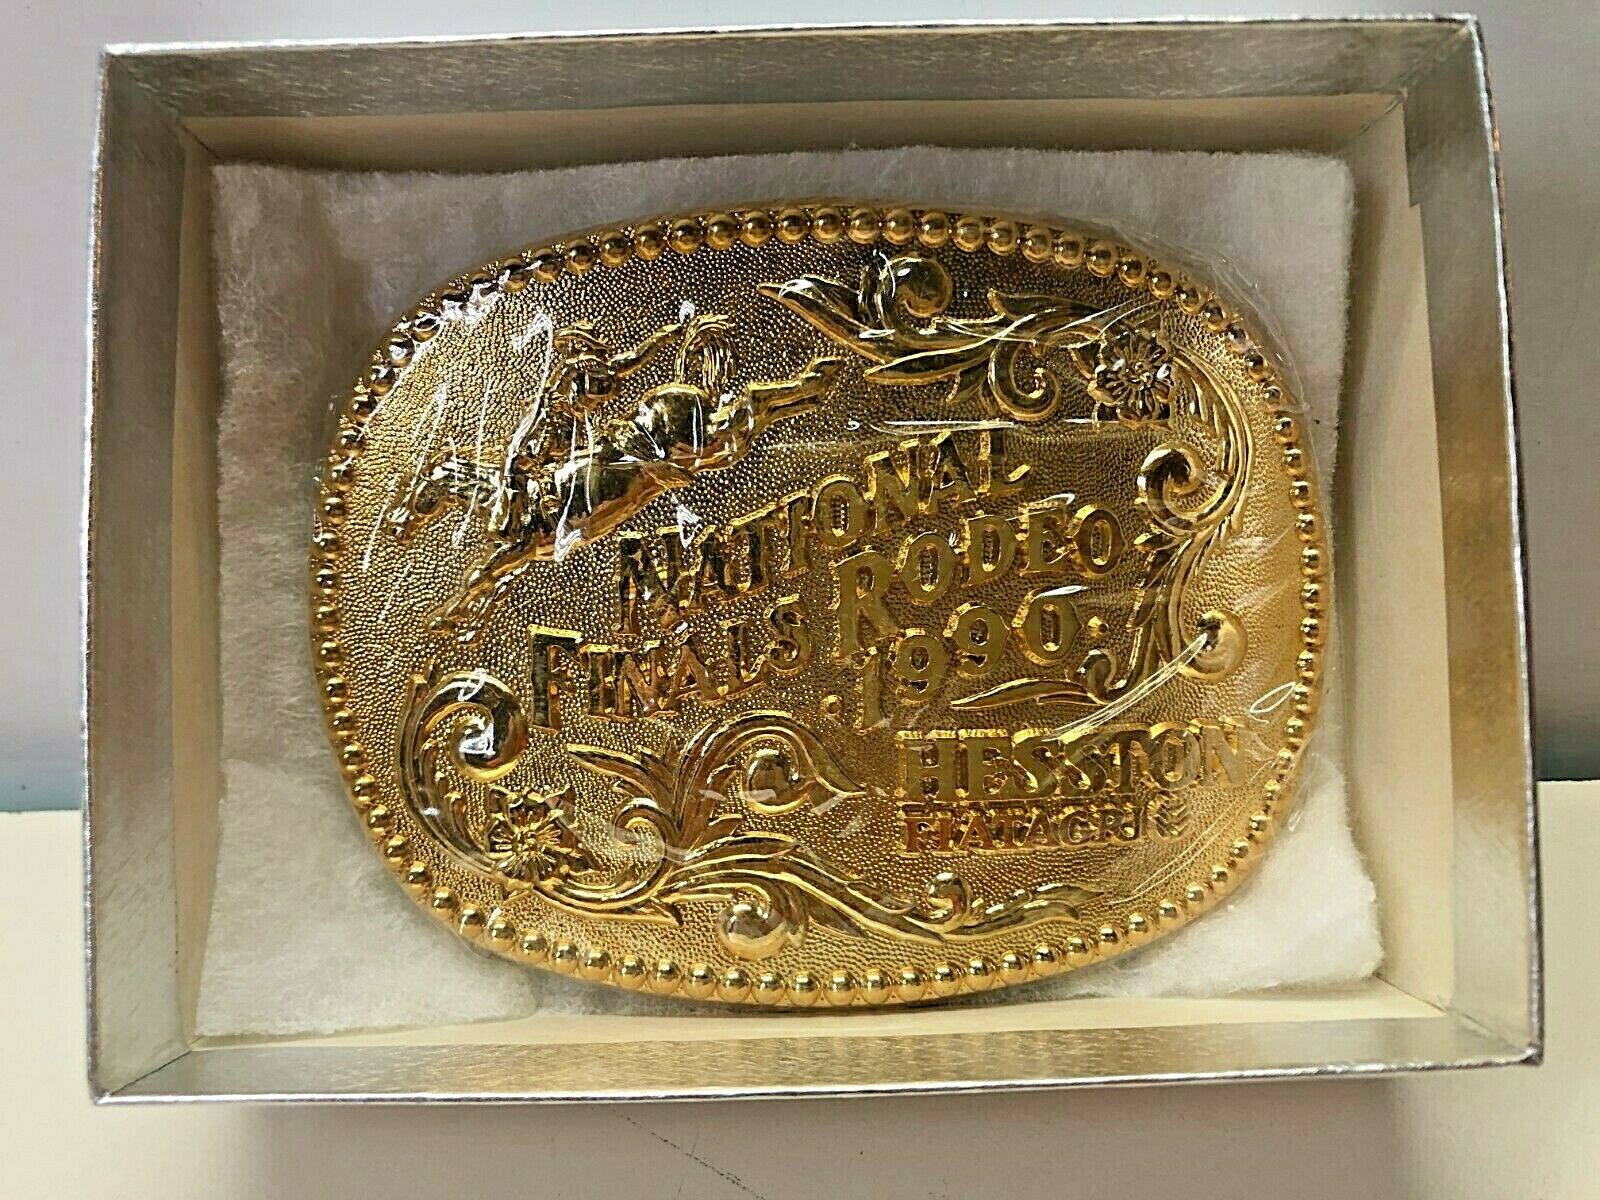 Hesston 1990 Dealer Gold Award Nfr Belt Buckle New In Box Never Worn # 606